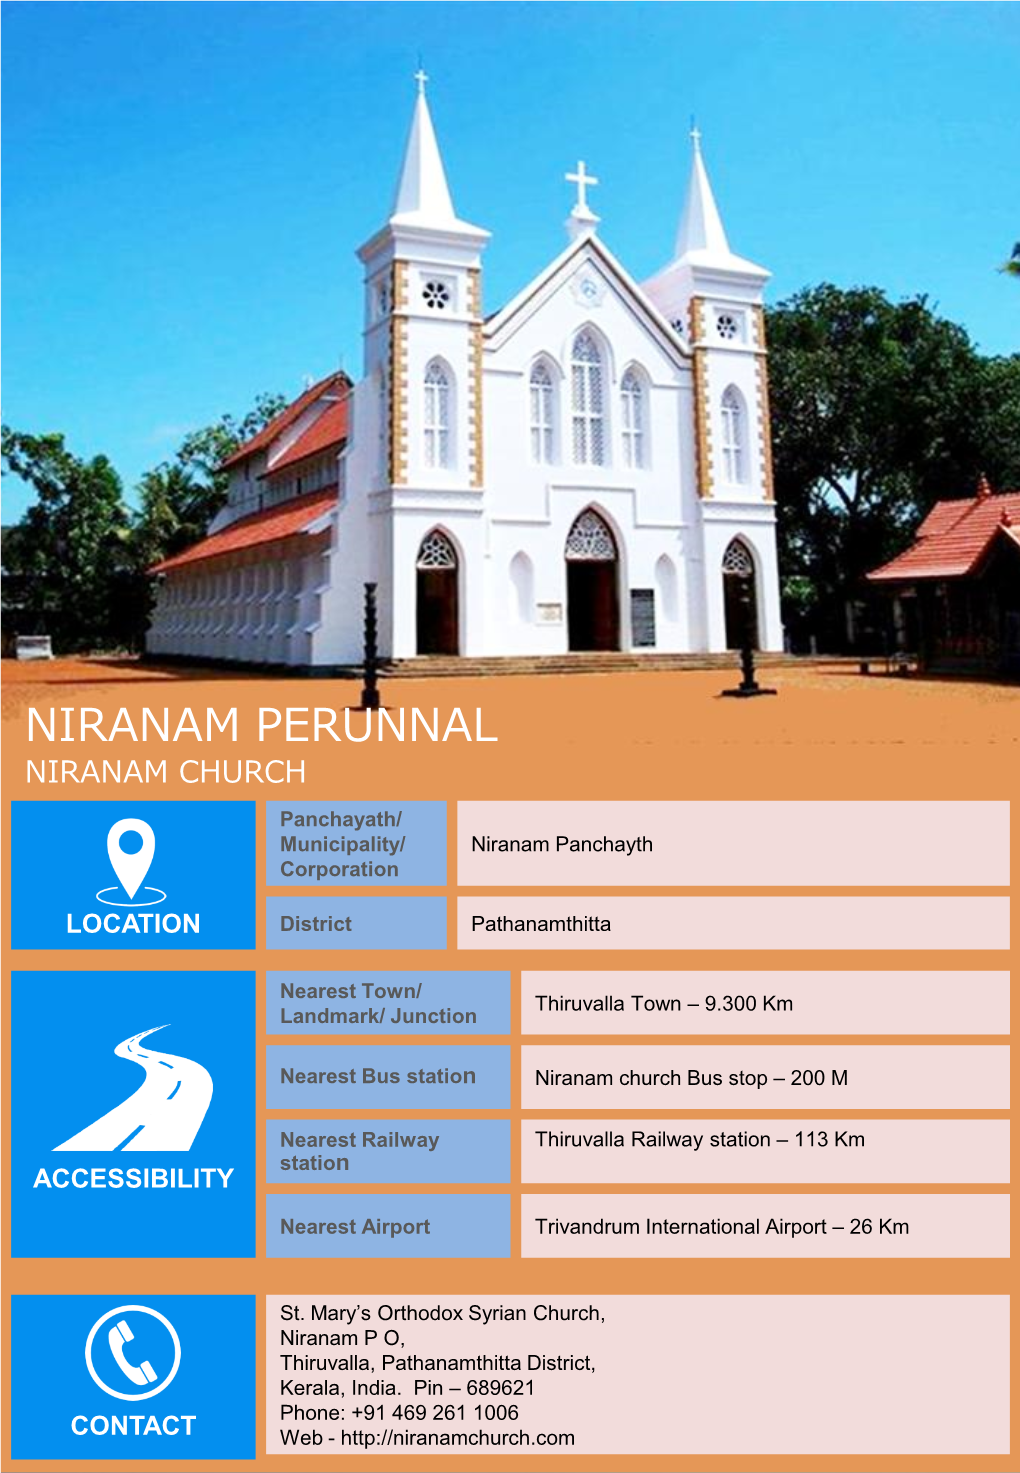 Niranam Perunnal Niranam Church